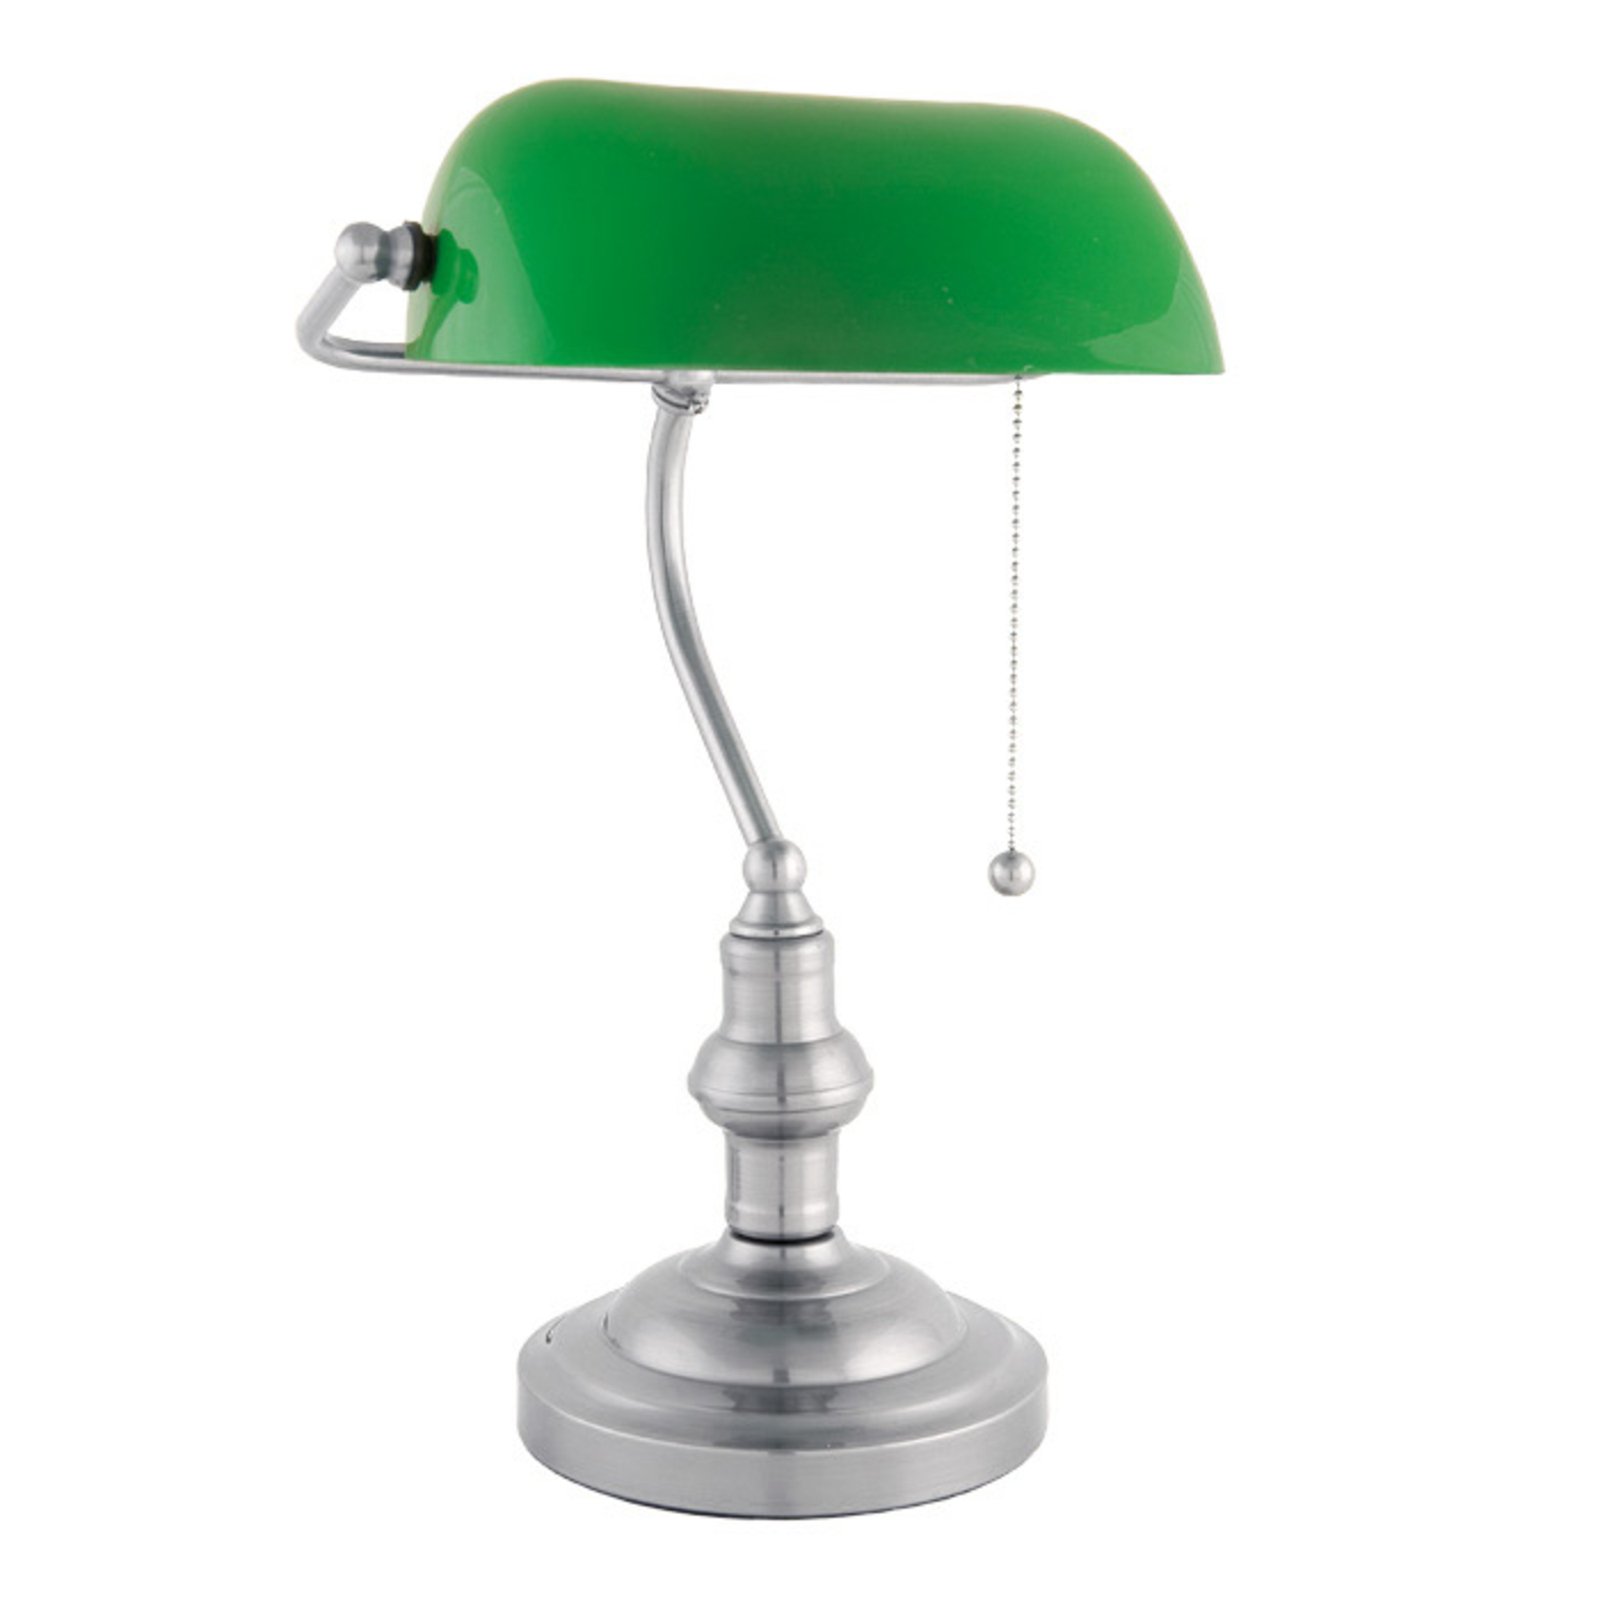 Decorative banker lamp Verda with a nickel base